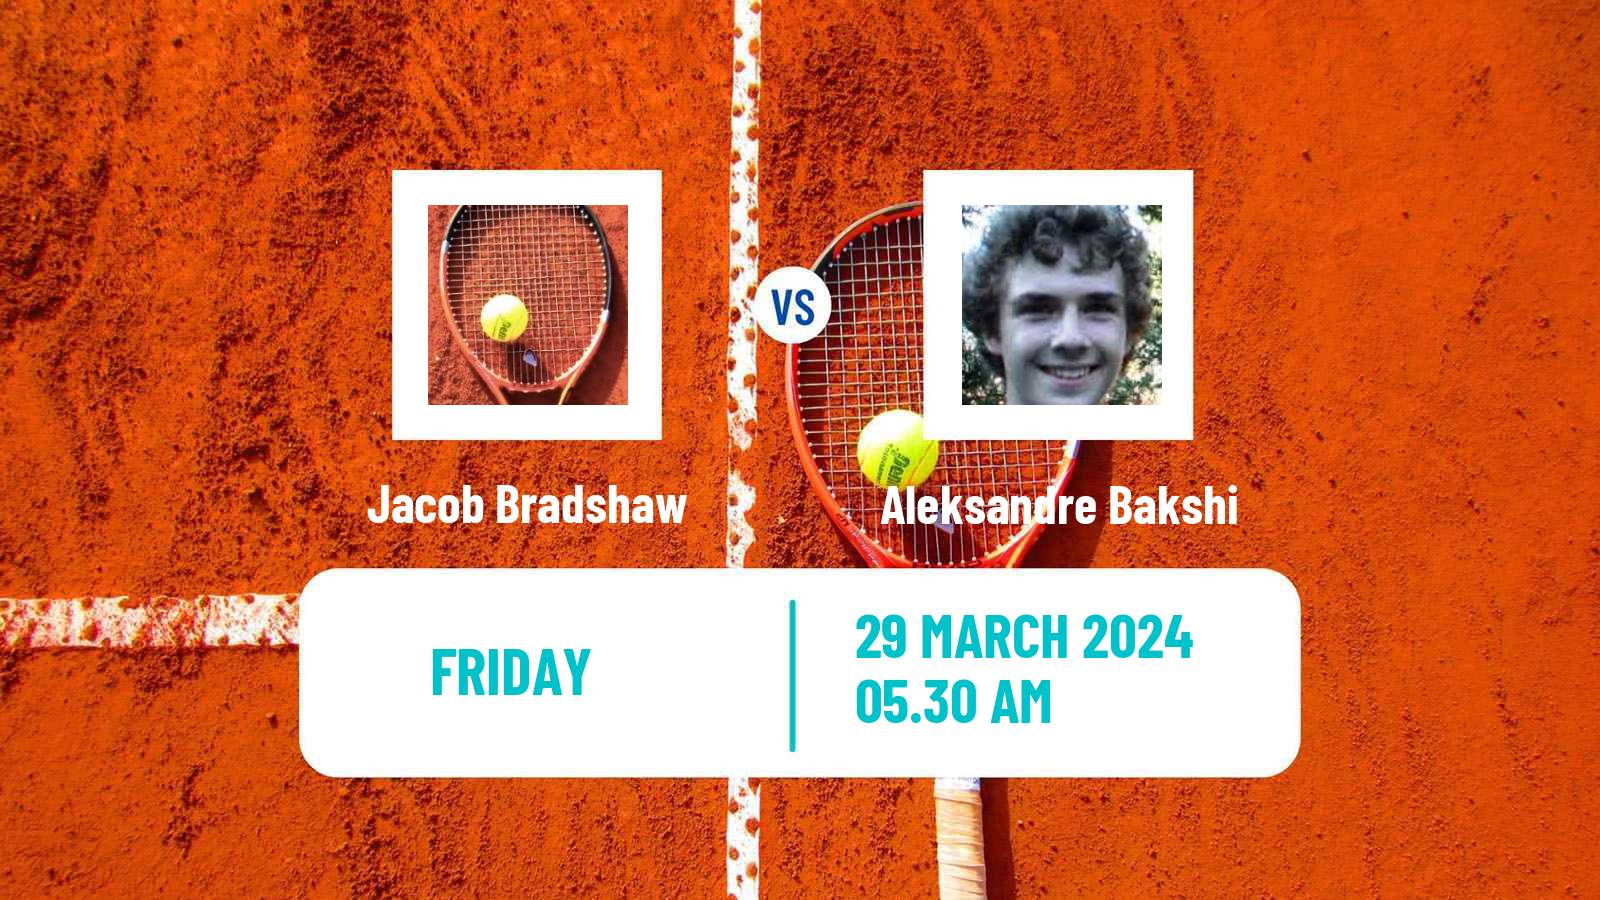 Tennis ITF M15 Heraklion 4 Men Jacob Bradshaw - Aleksandre Bakshi